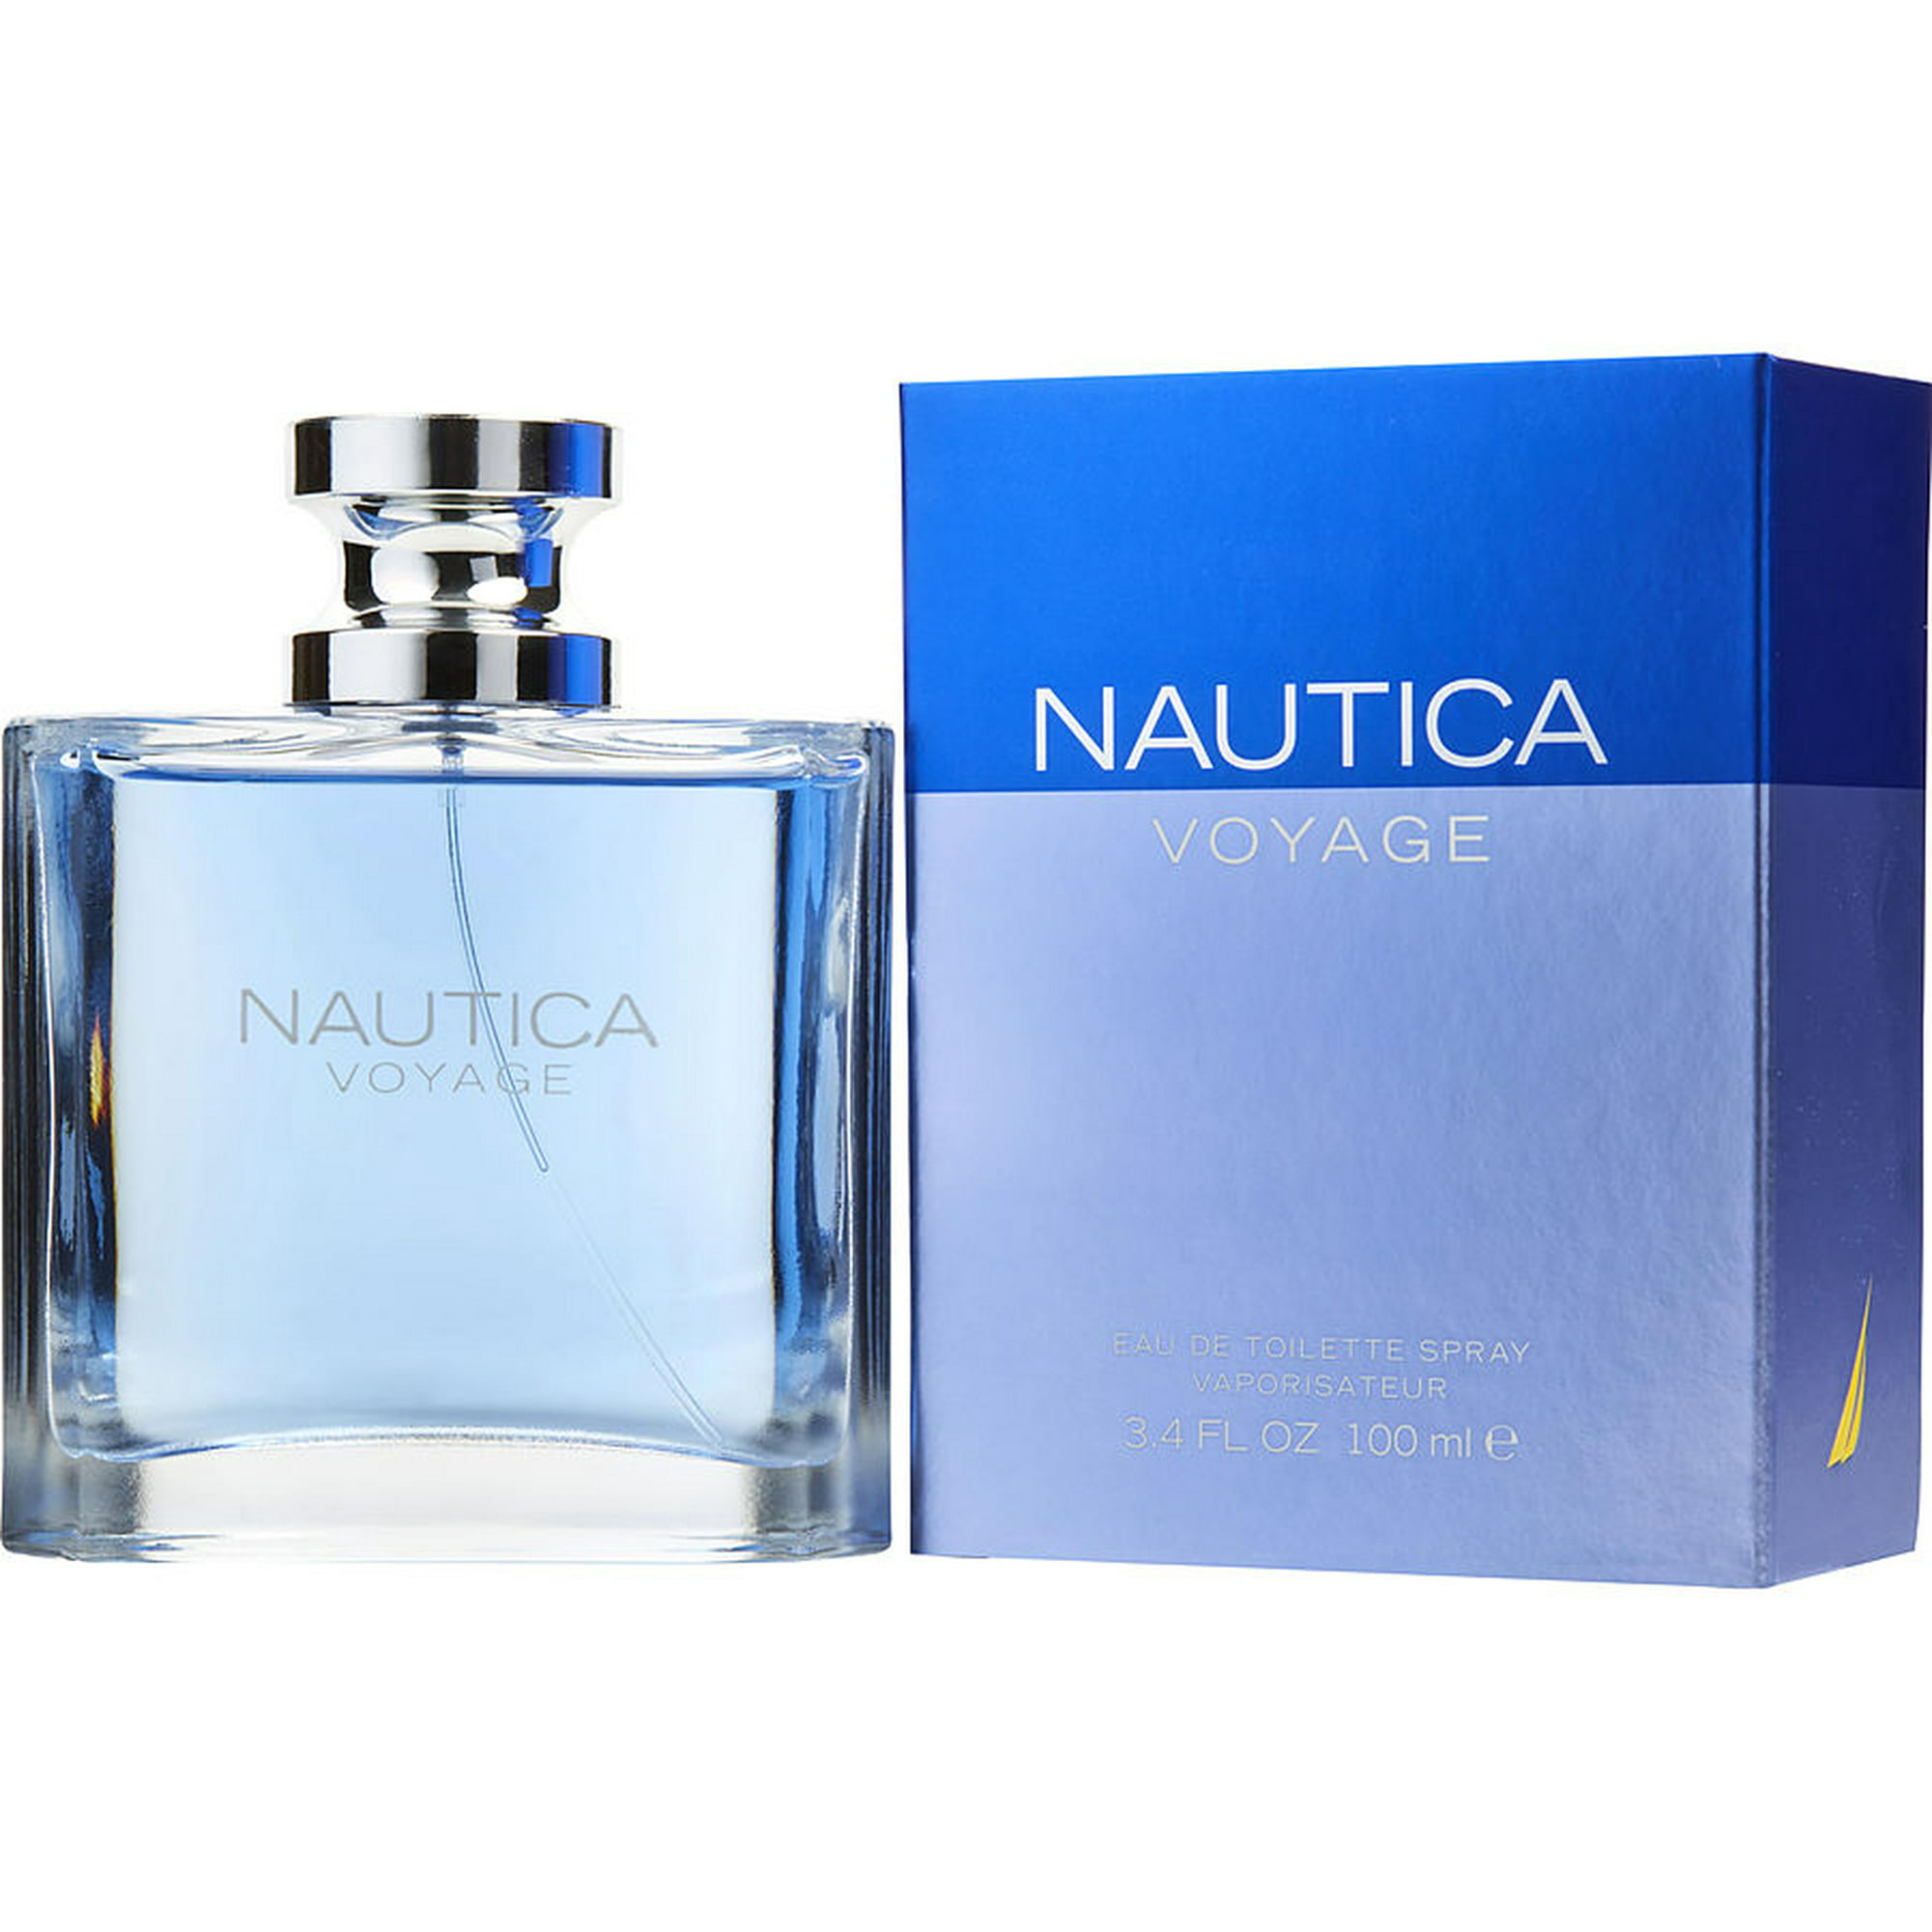 nautica voyage perfume liverpool